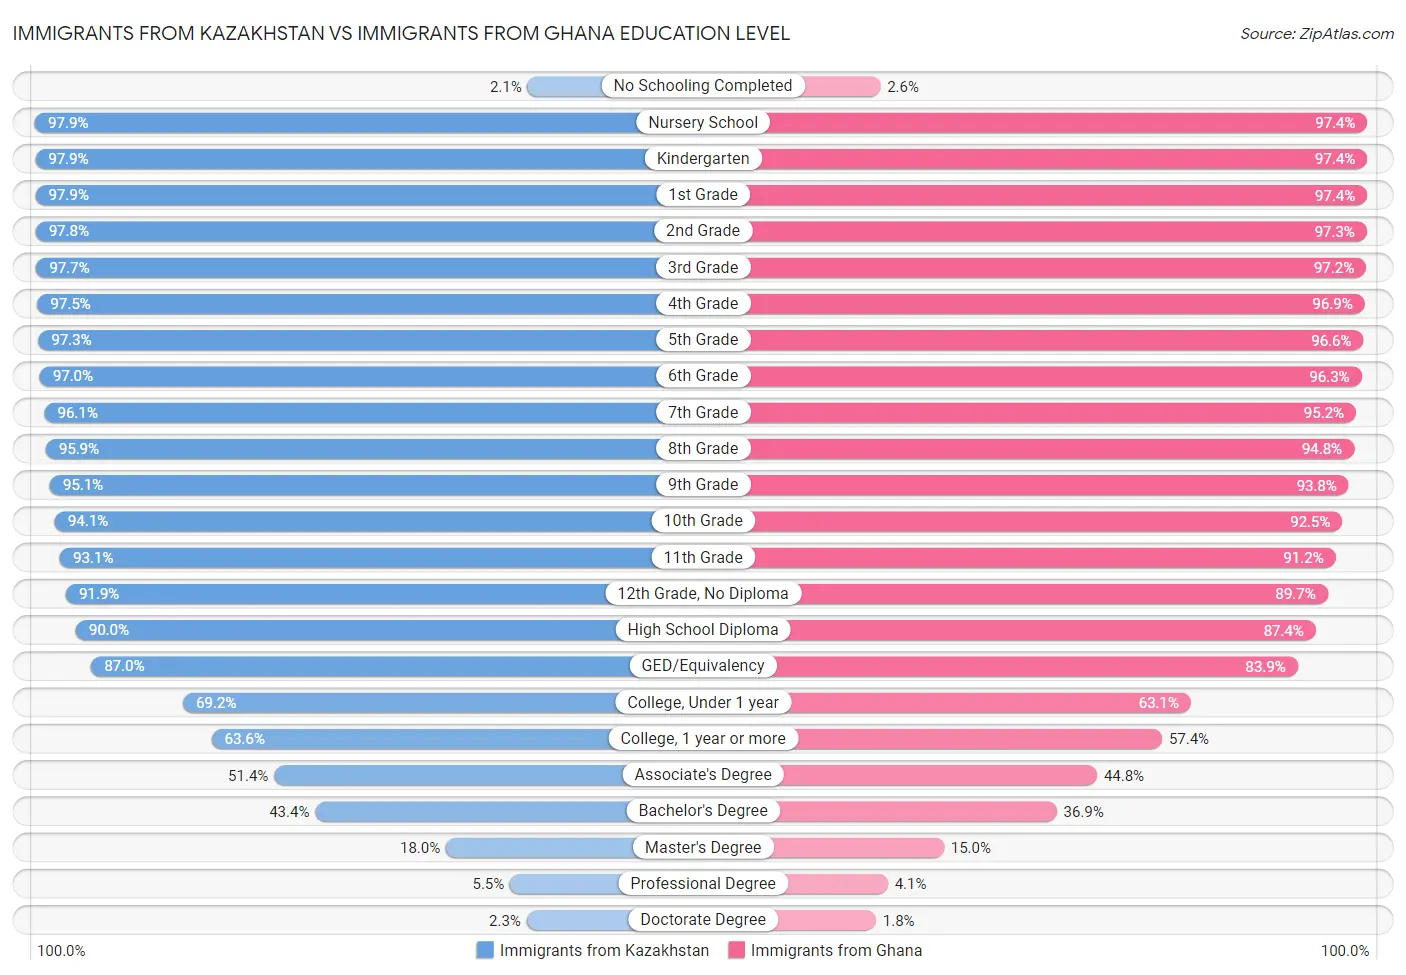 Immigrants from Kazakhstan vs Immigrants from Ghana Education Level